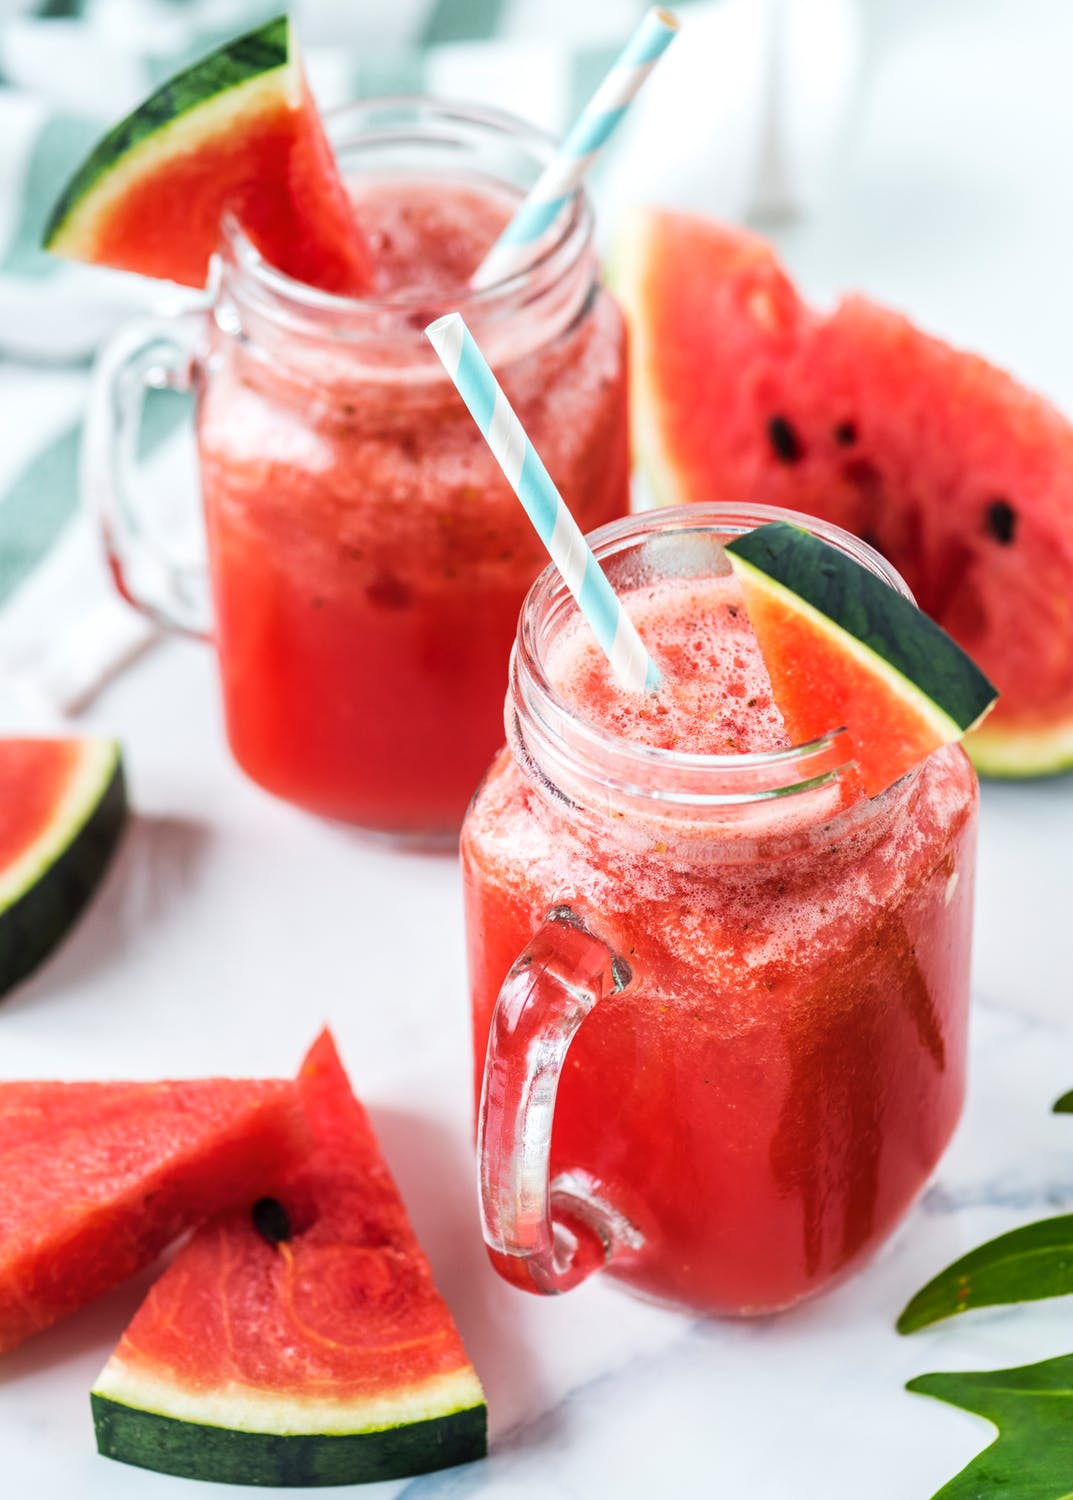 Sample of Watermelon Juice